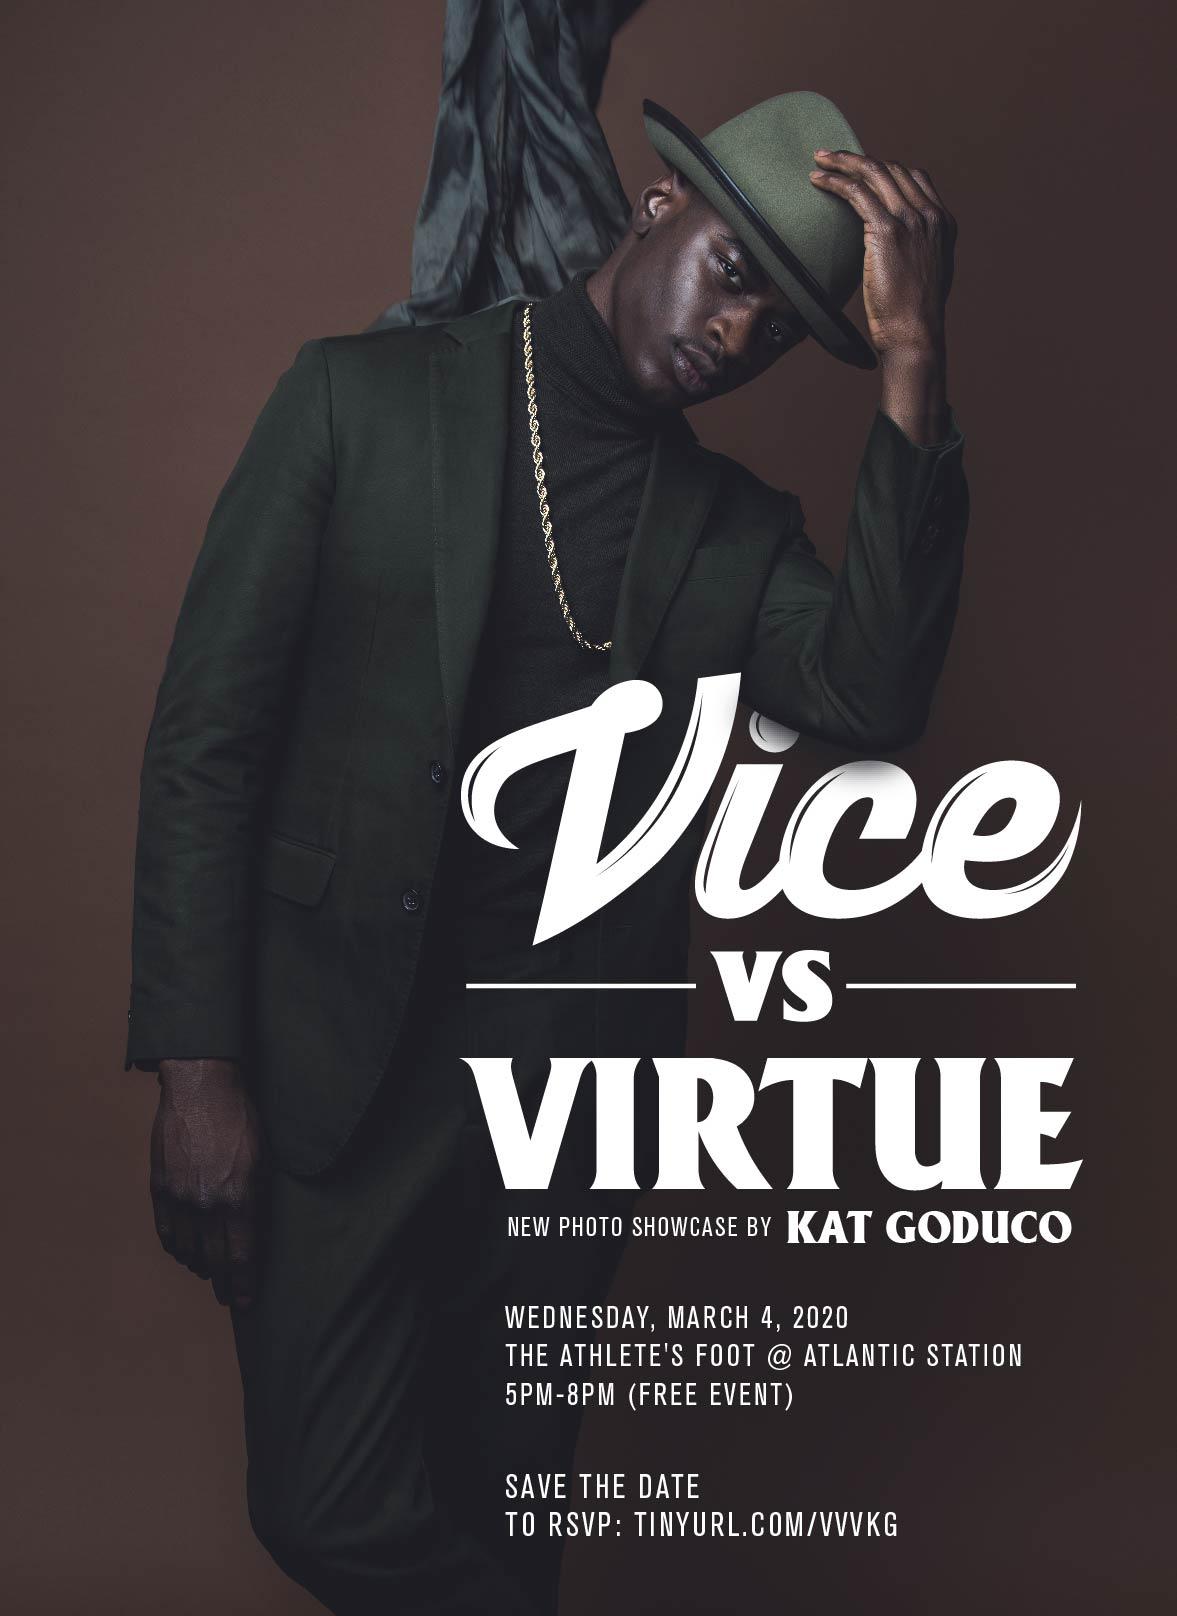 Vice vs Virtue - A Kat Goduco Photo Showcase